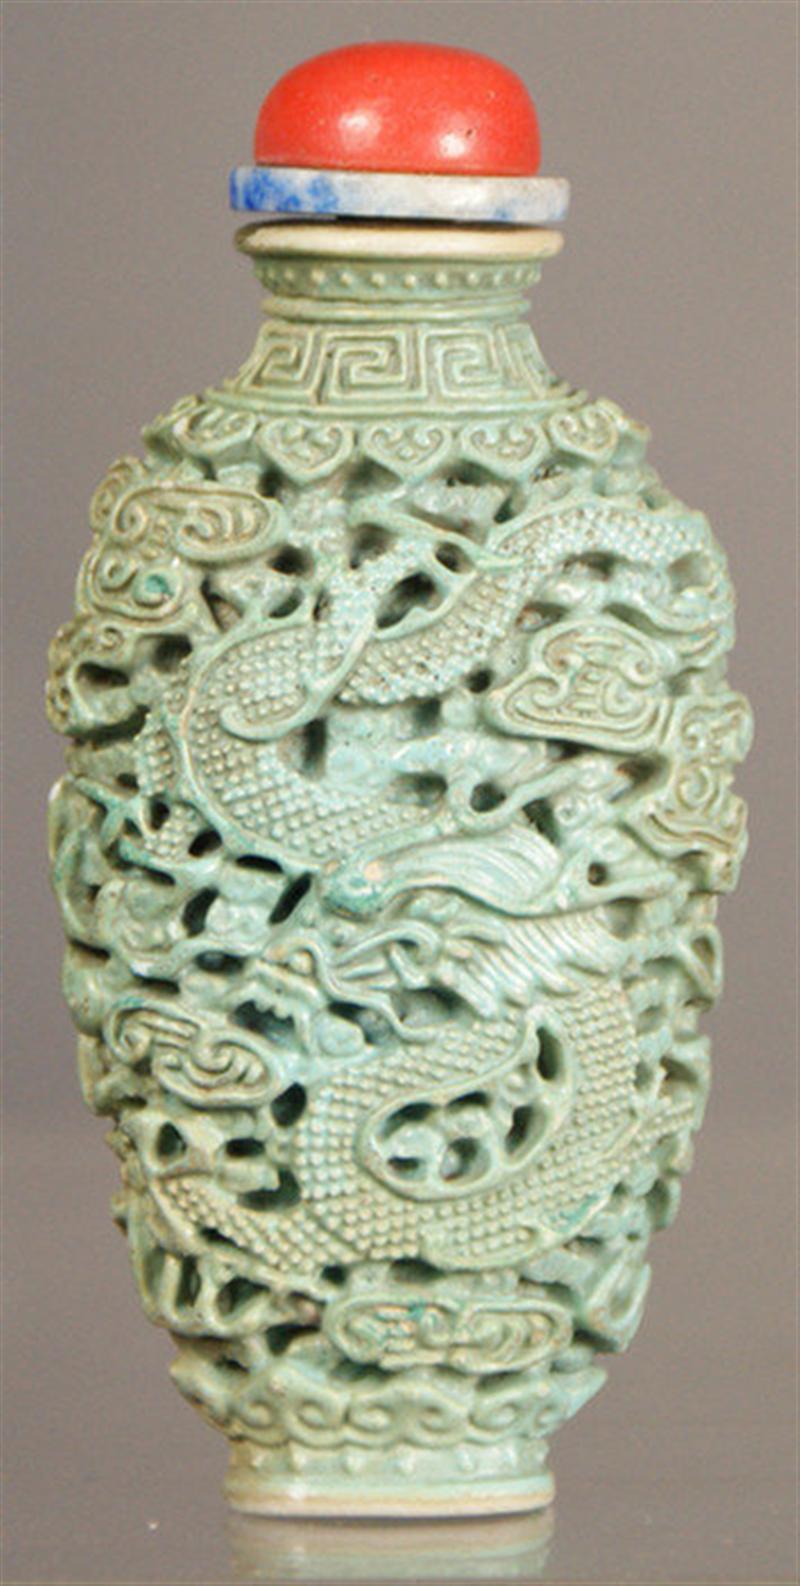 (1) Molded porcelain turquoise